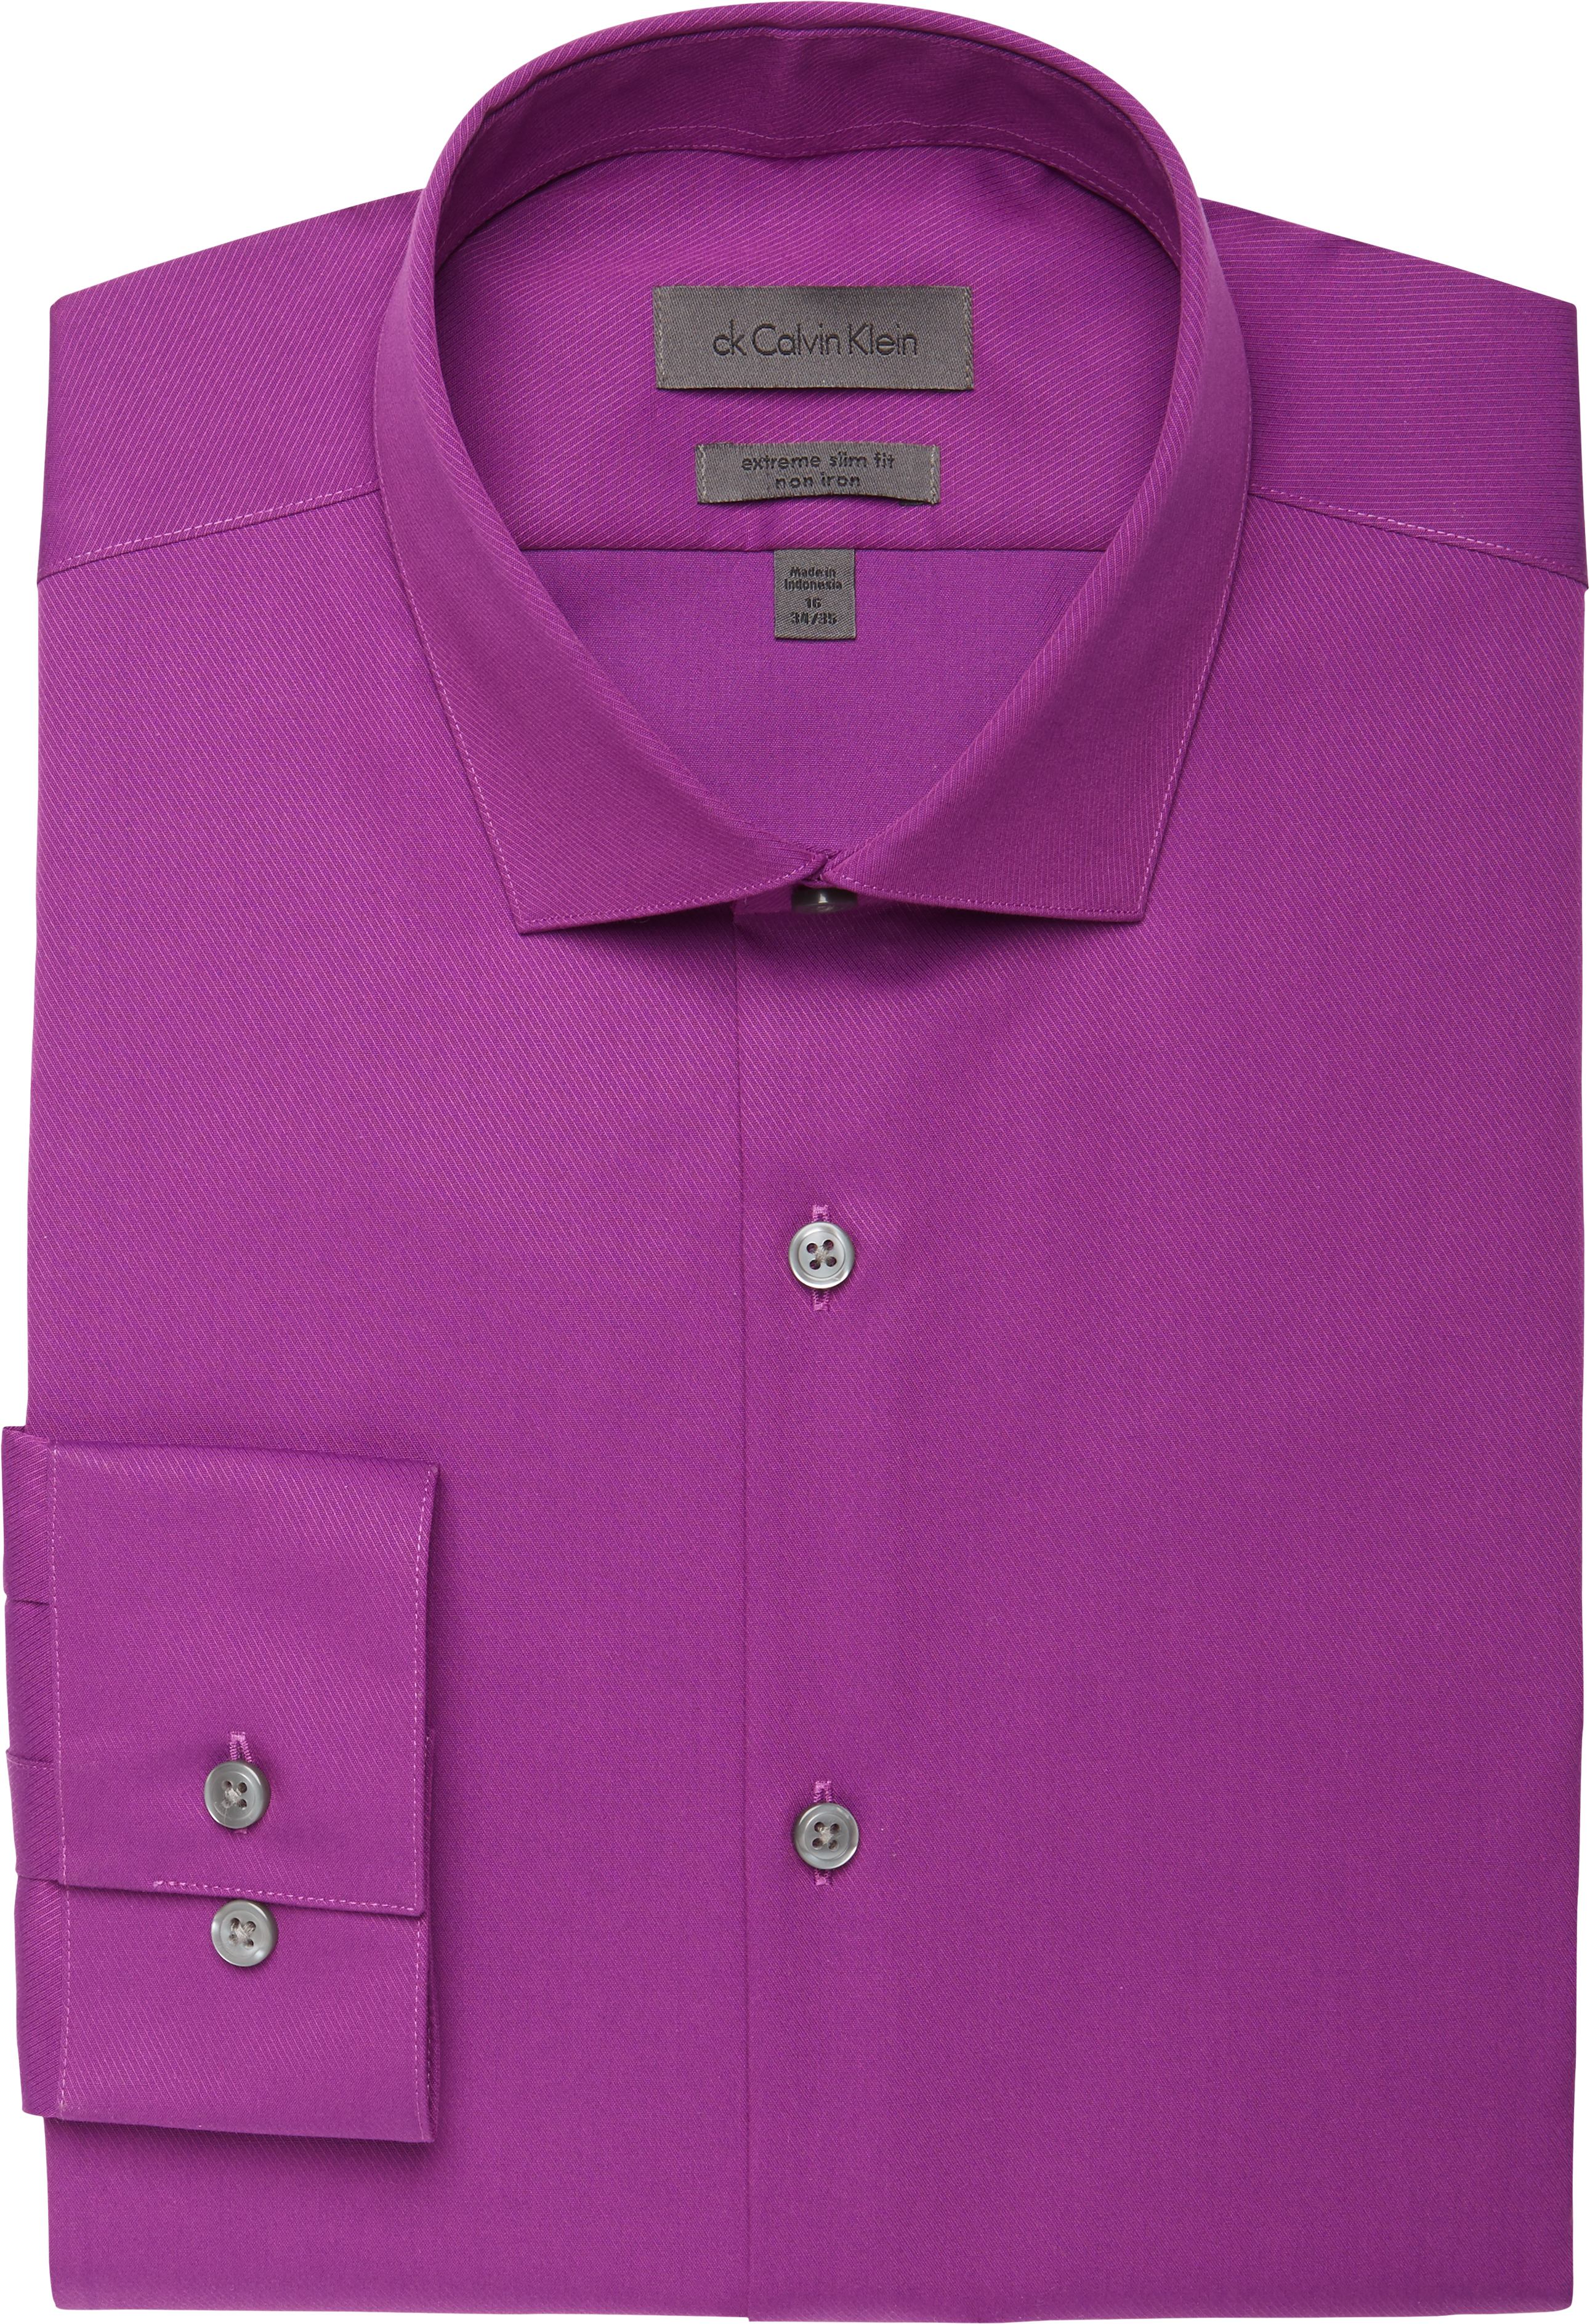 Calvin Klein Bright Violet Extreme Slim Fit Dress Shirt - Men's Shirts ...